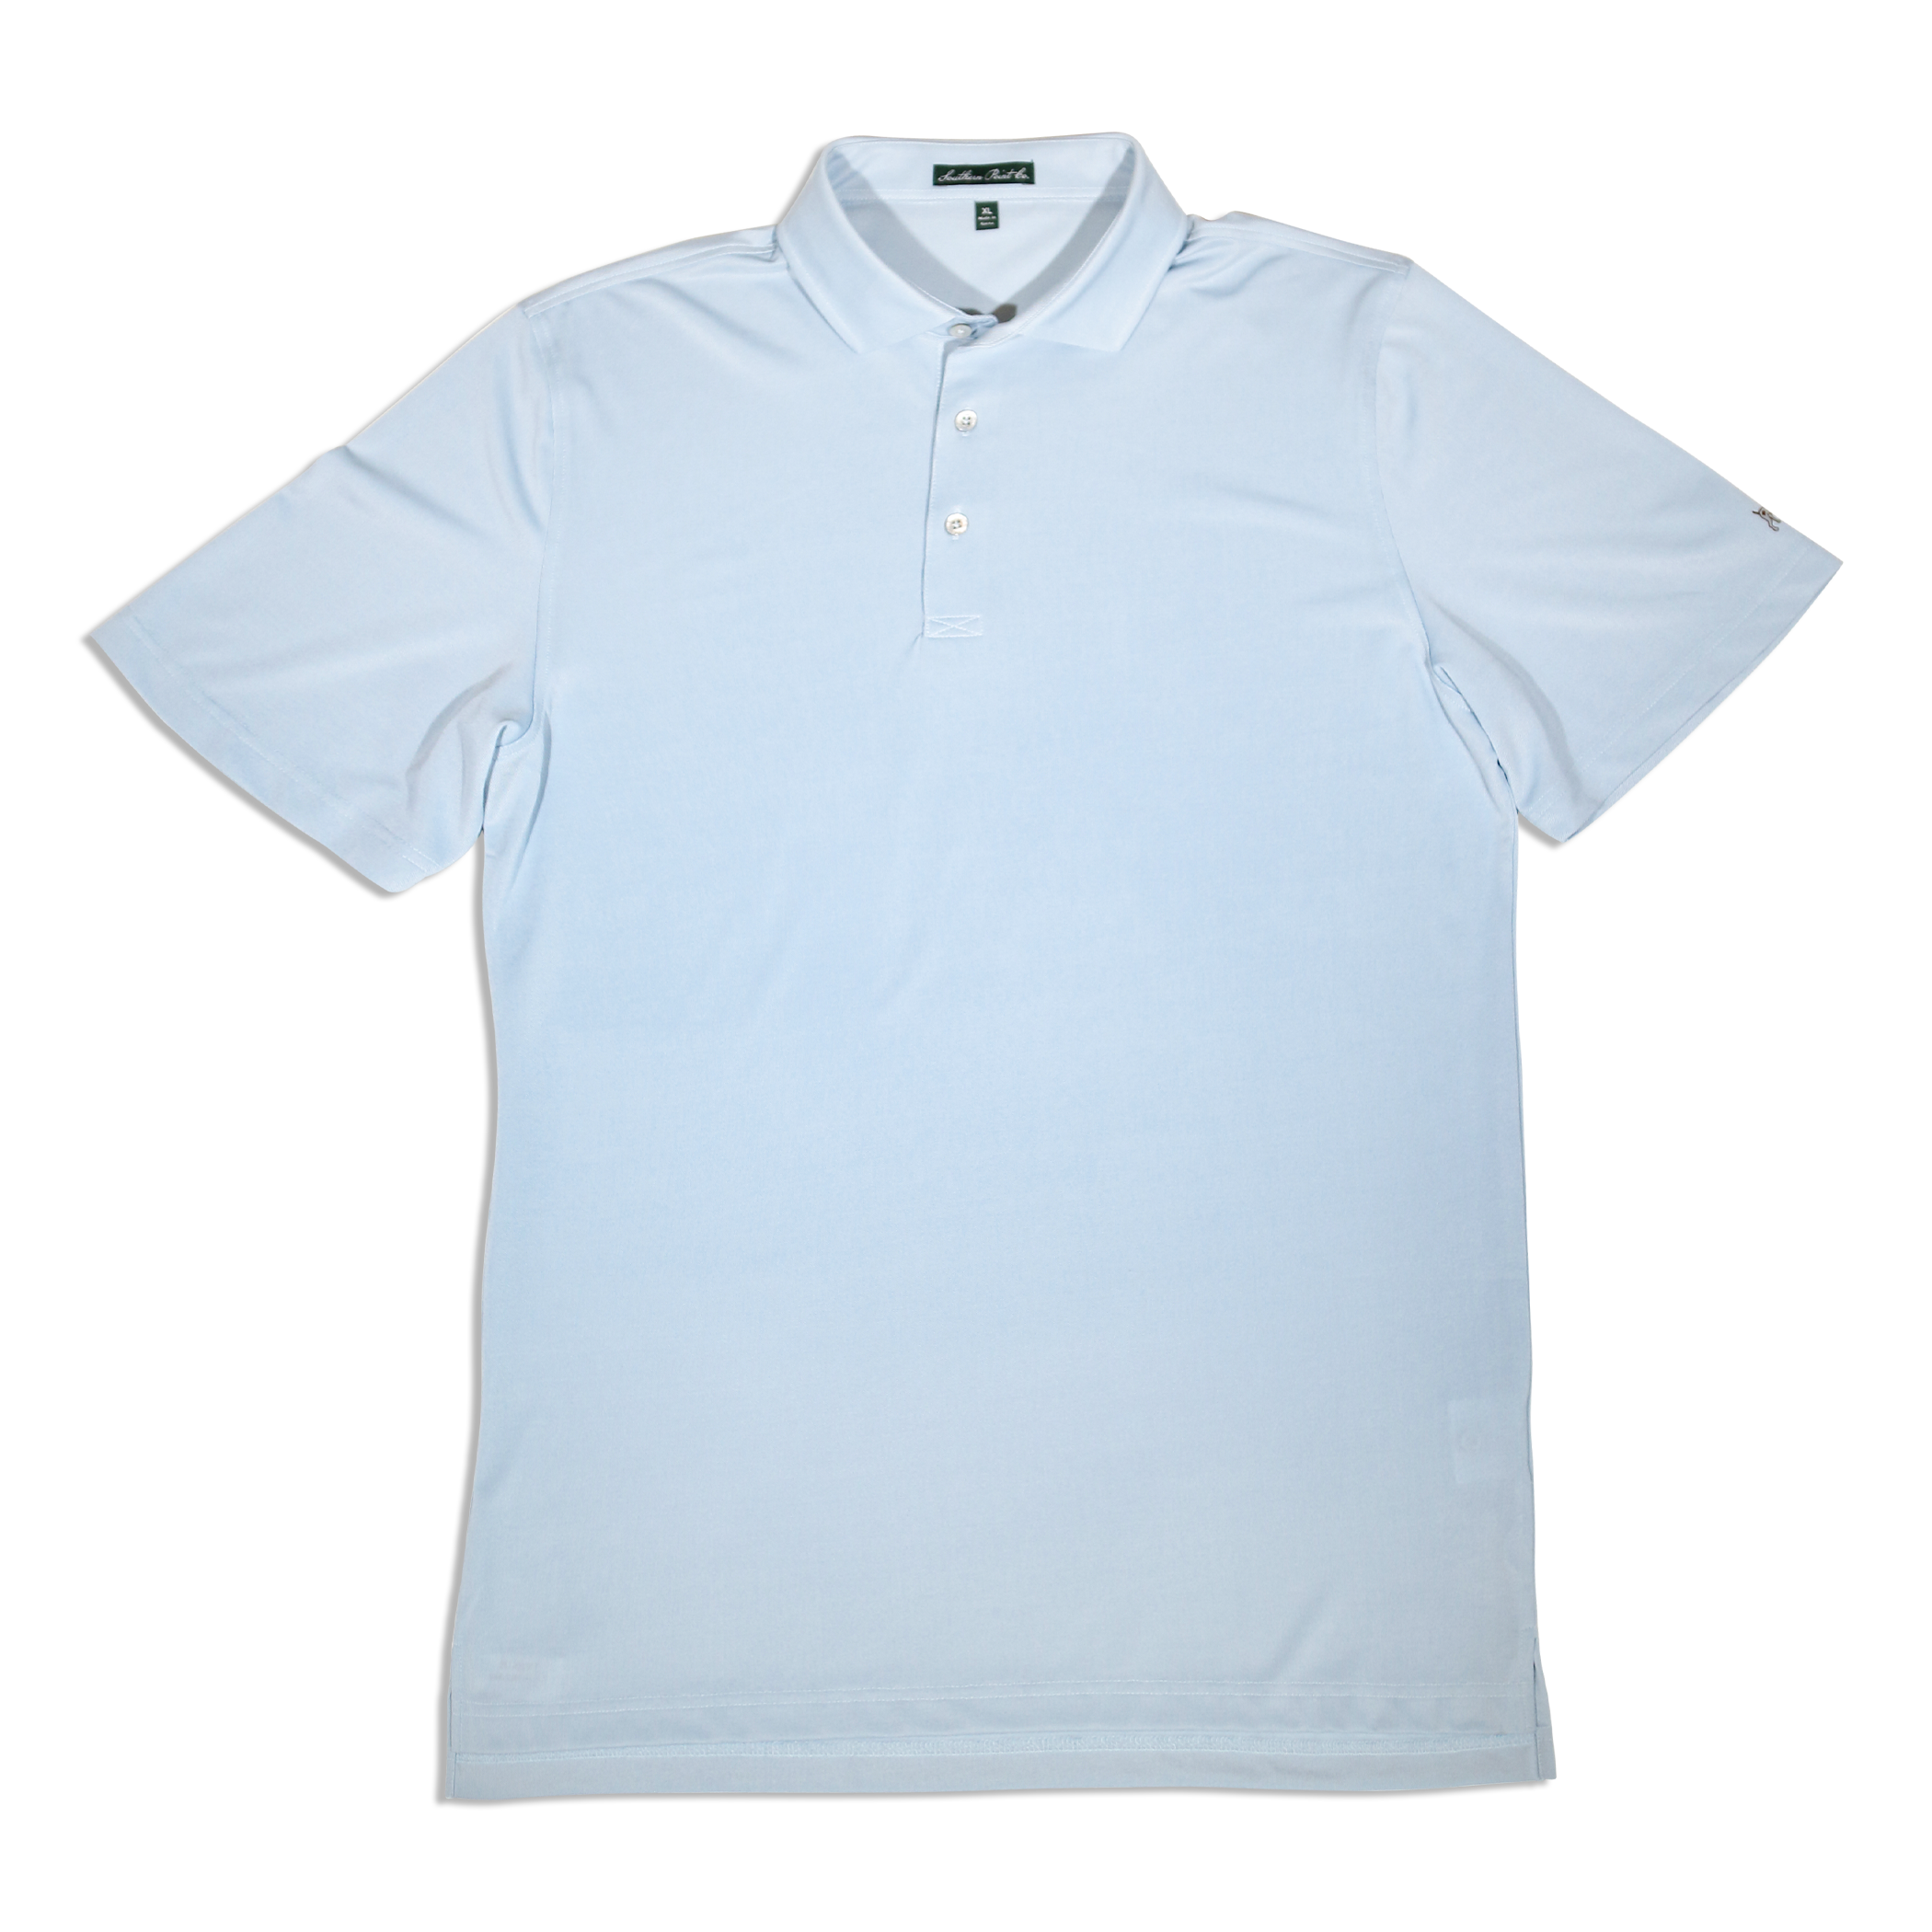 Classic Short Sleeve Stone Washed White Pique Polo Shirt